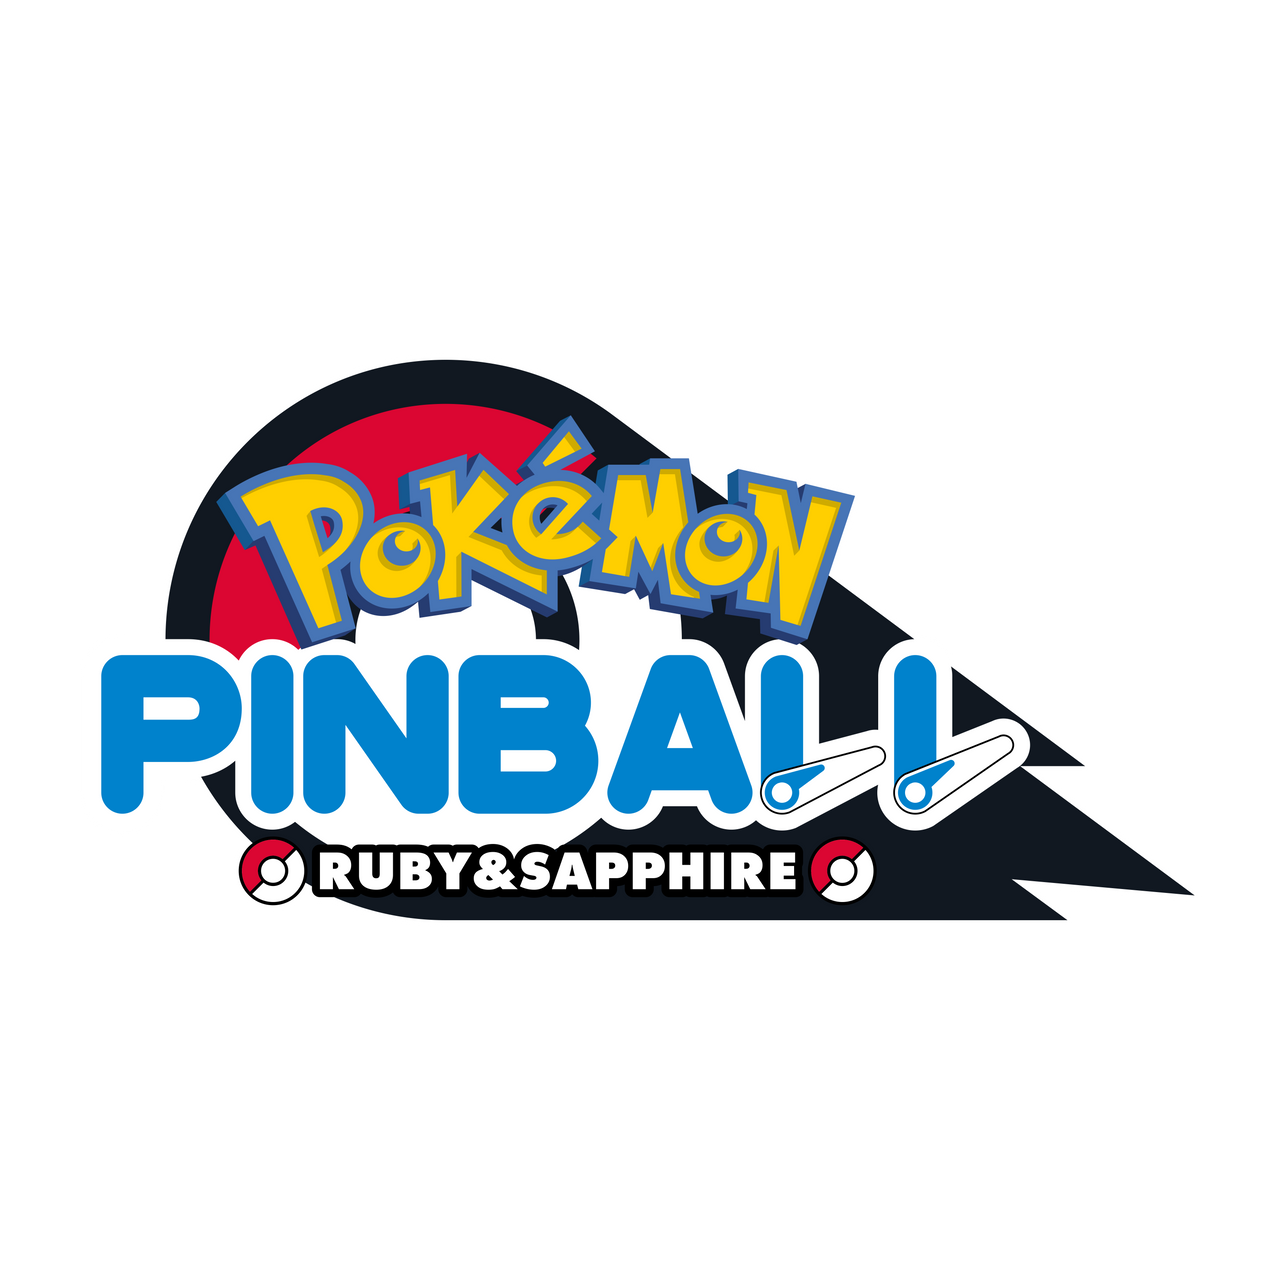 Pokémon Pinball Ruby e Sapphire